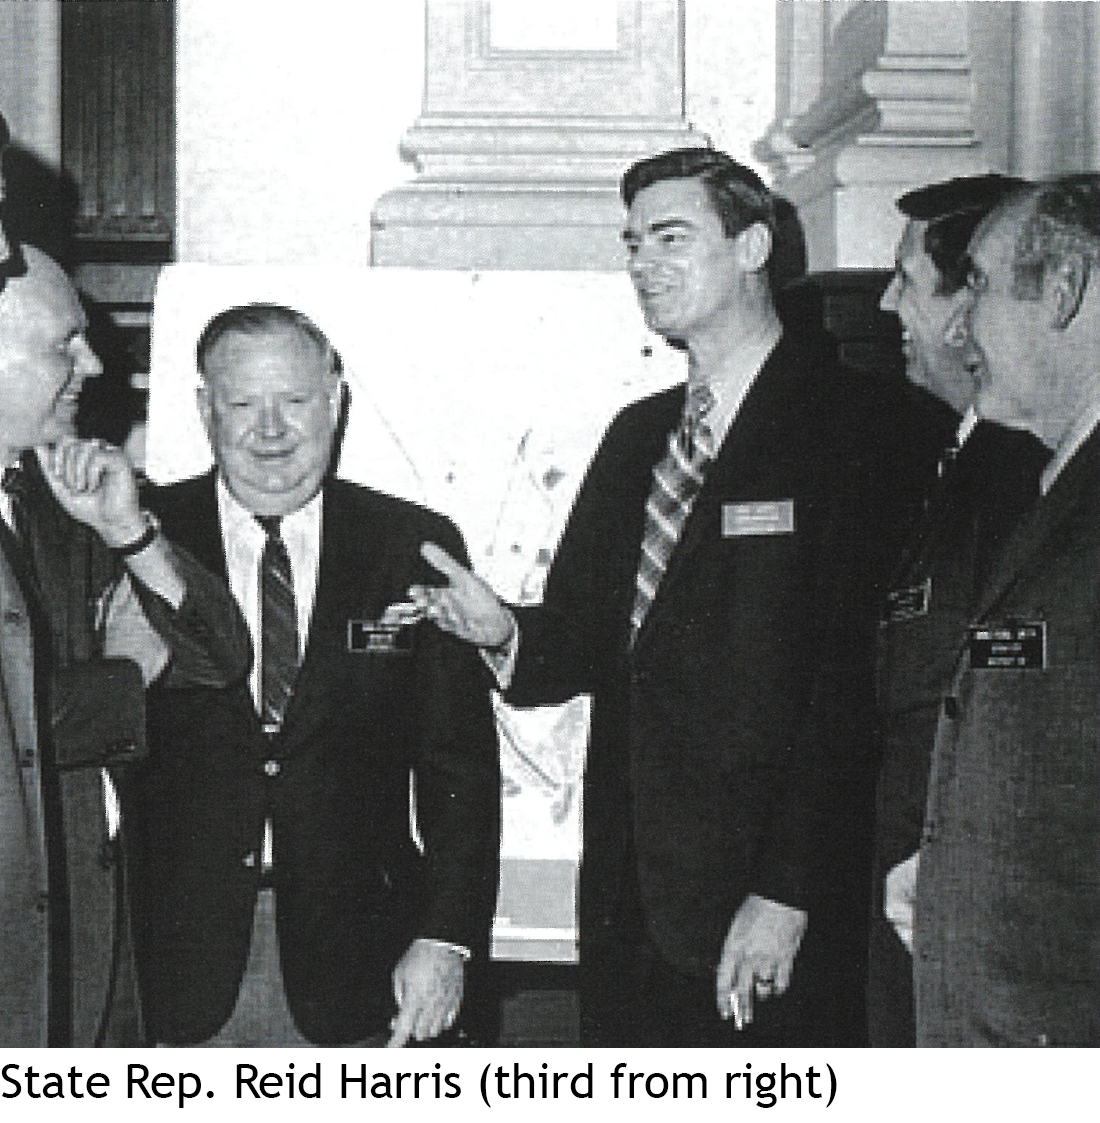 State Rep. Reid Harris